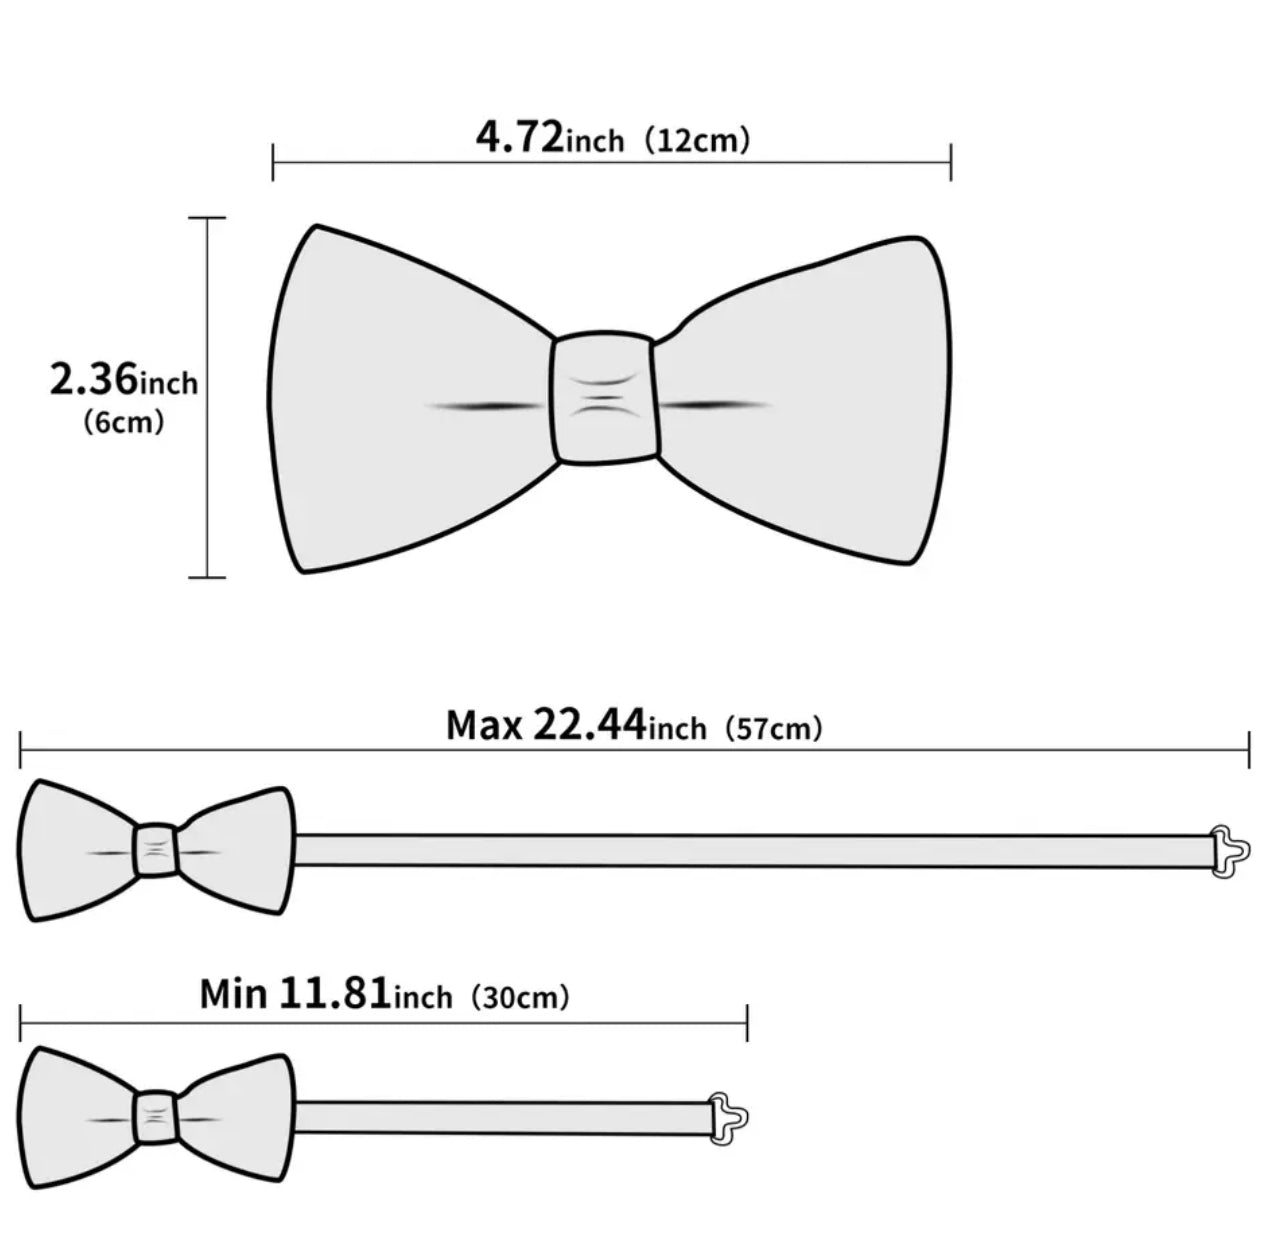 Men’s Silk Coordinated Black Bow Tie Set - Blue Gold Paisley 2519